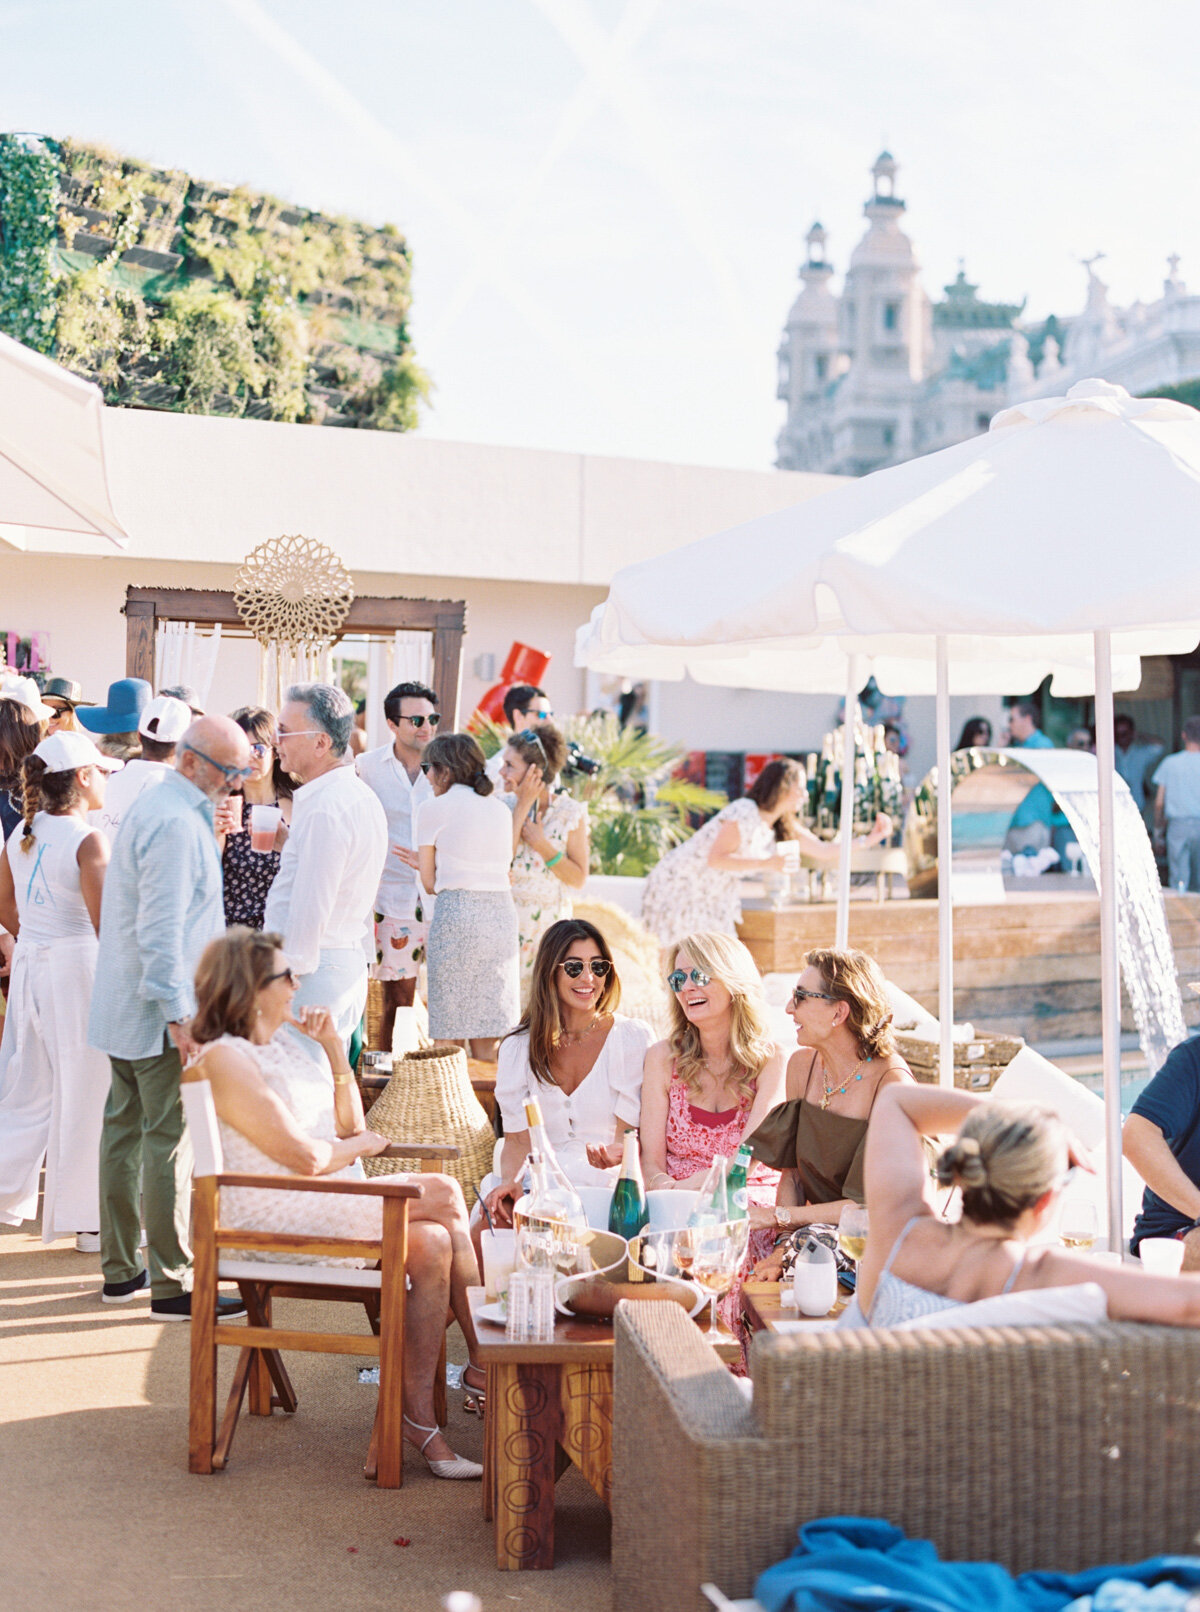 Nikki-Beach-Club-Pool-Monaco-Nice-Saint Tropez-Welcome-Dinner-Katie-Grant-destination-wedding (18 of 22).jpg